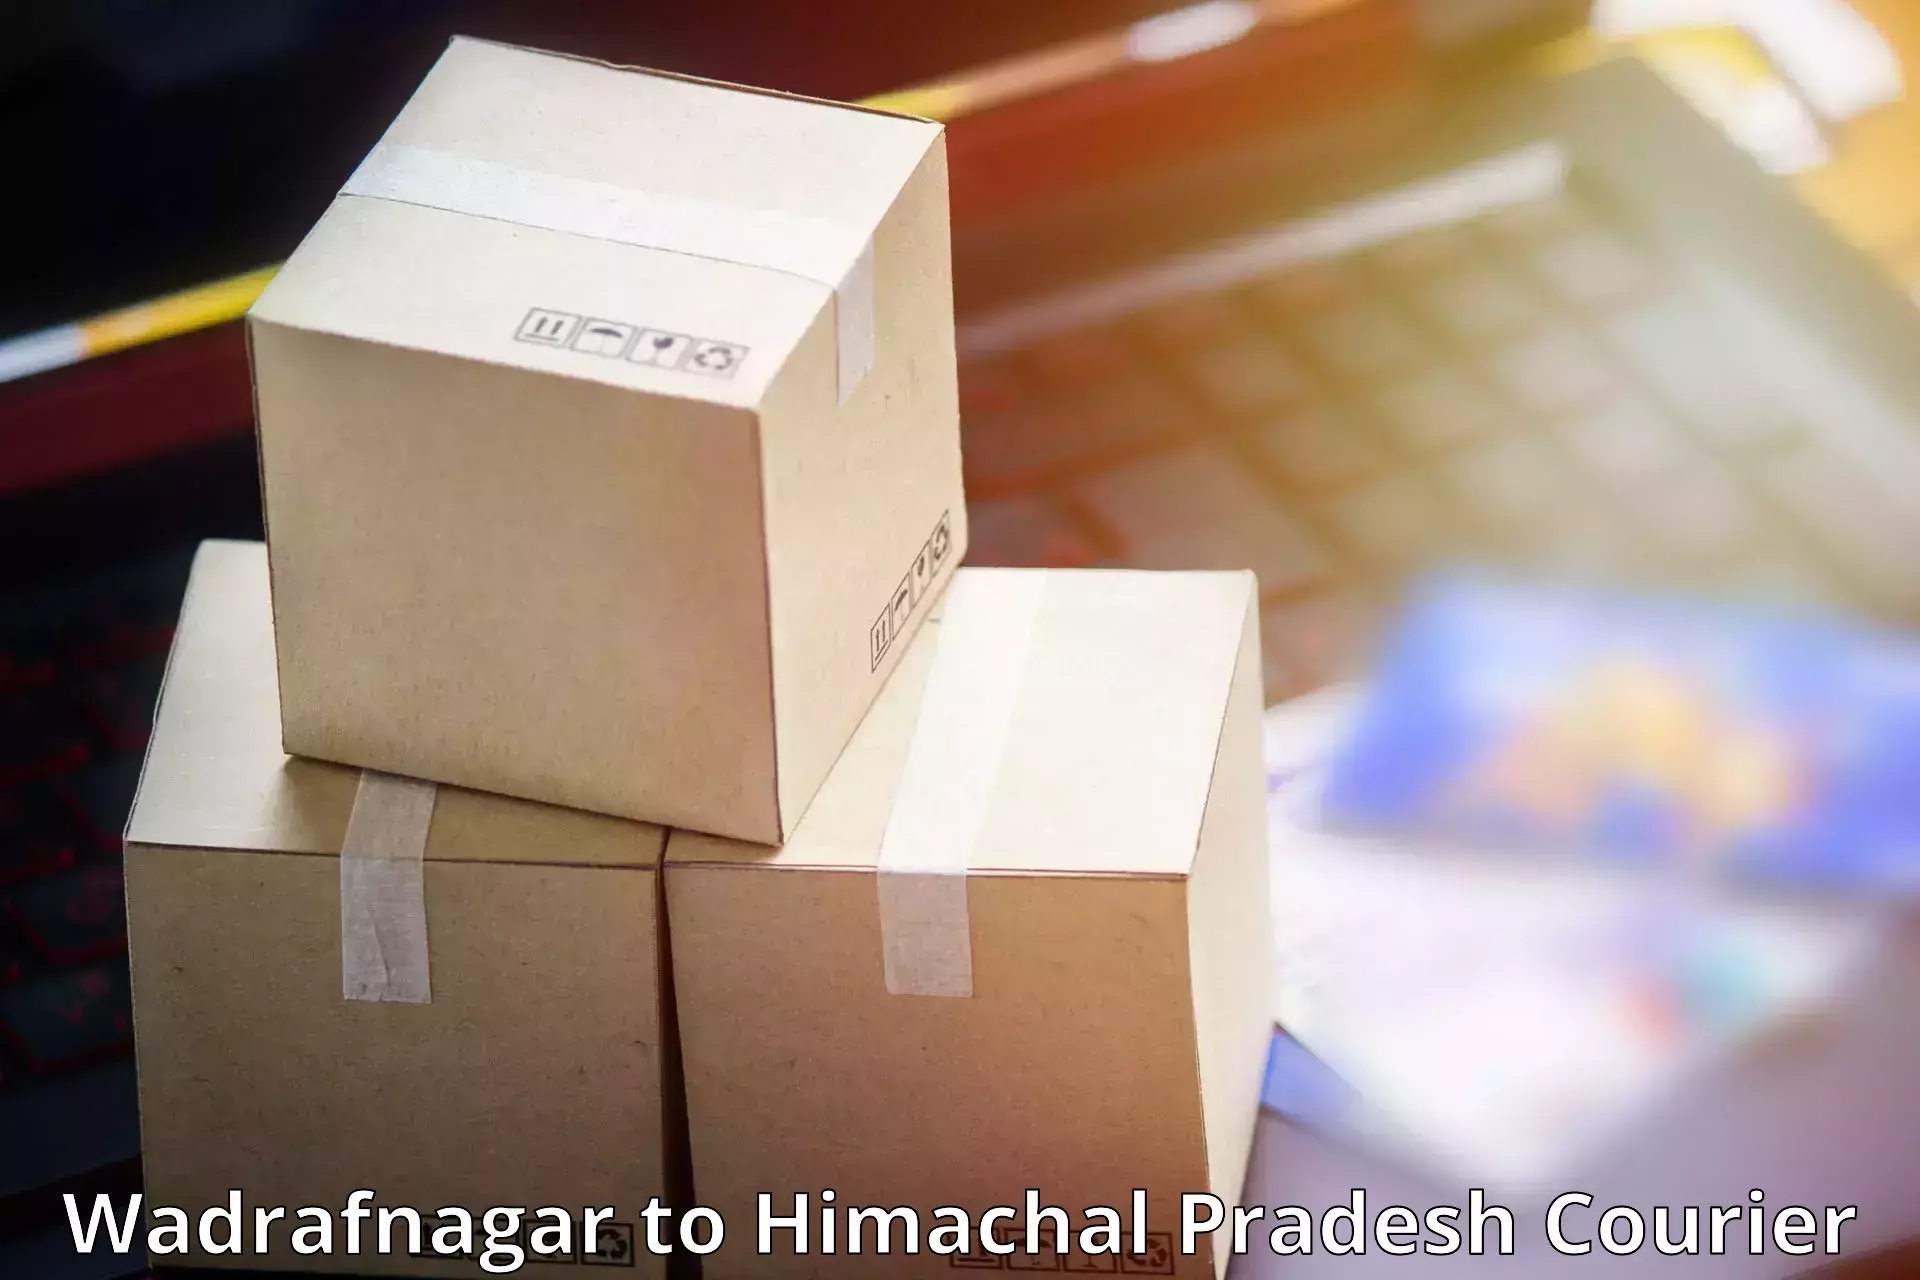 Lightweight parcel options Wadrafnagar to Sujanpur